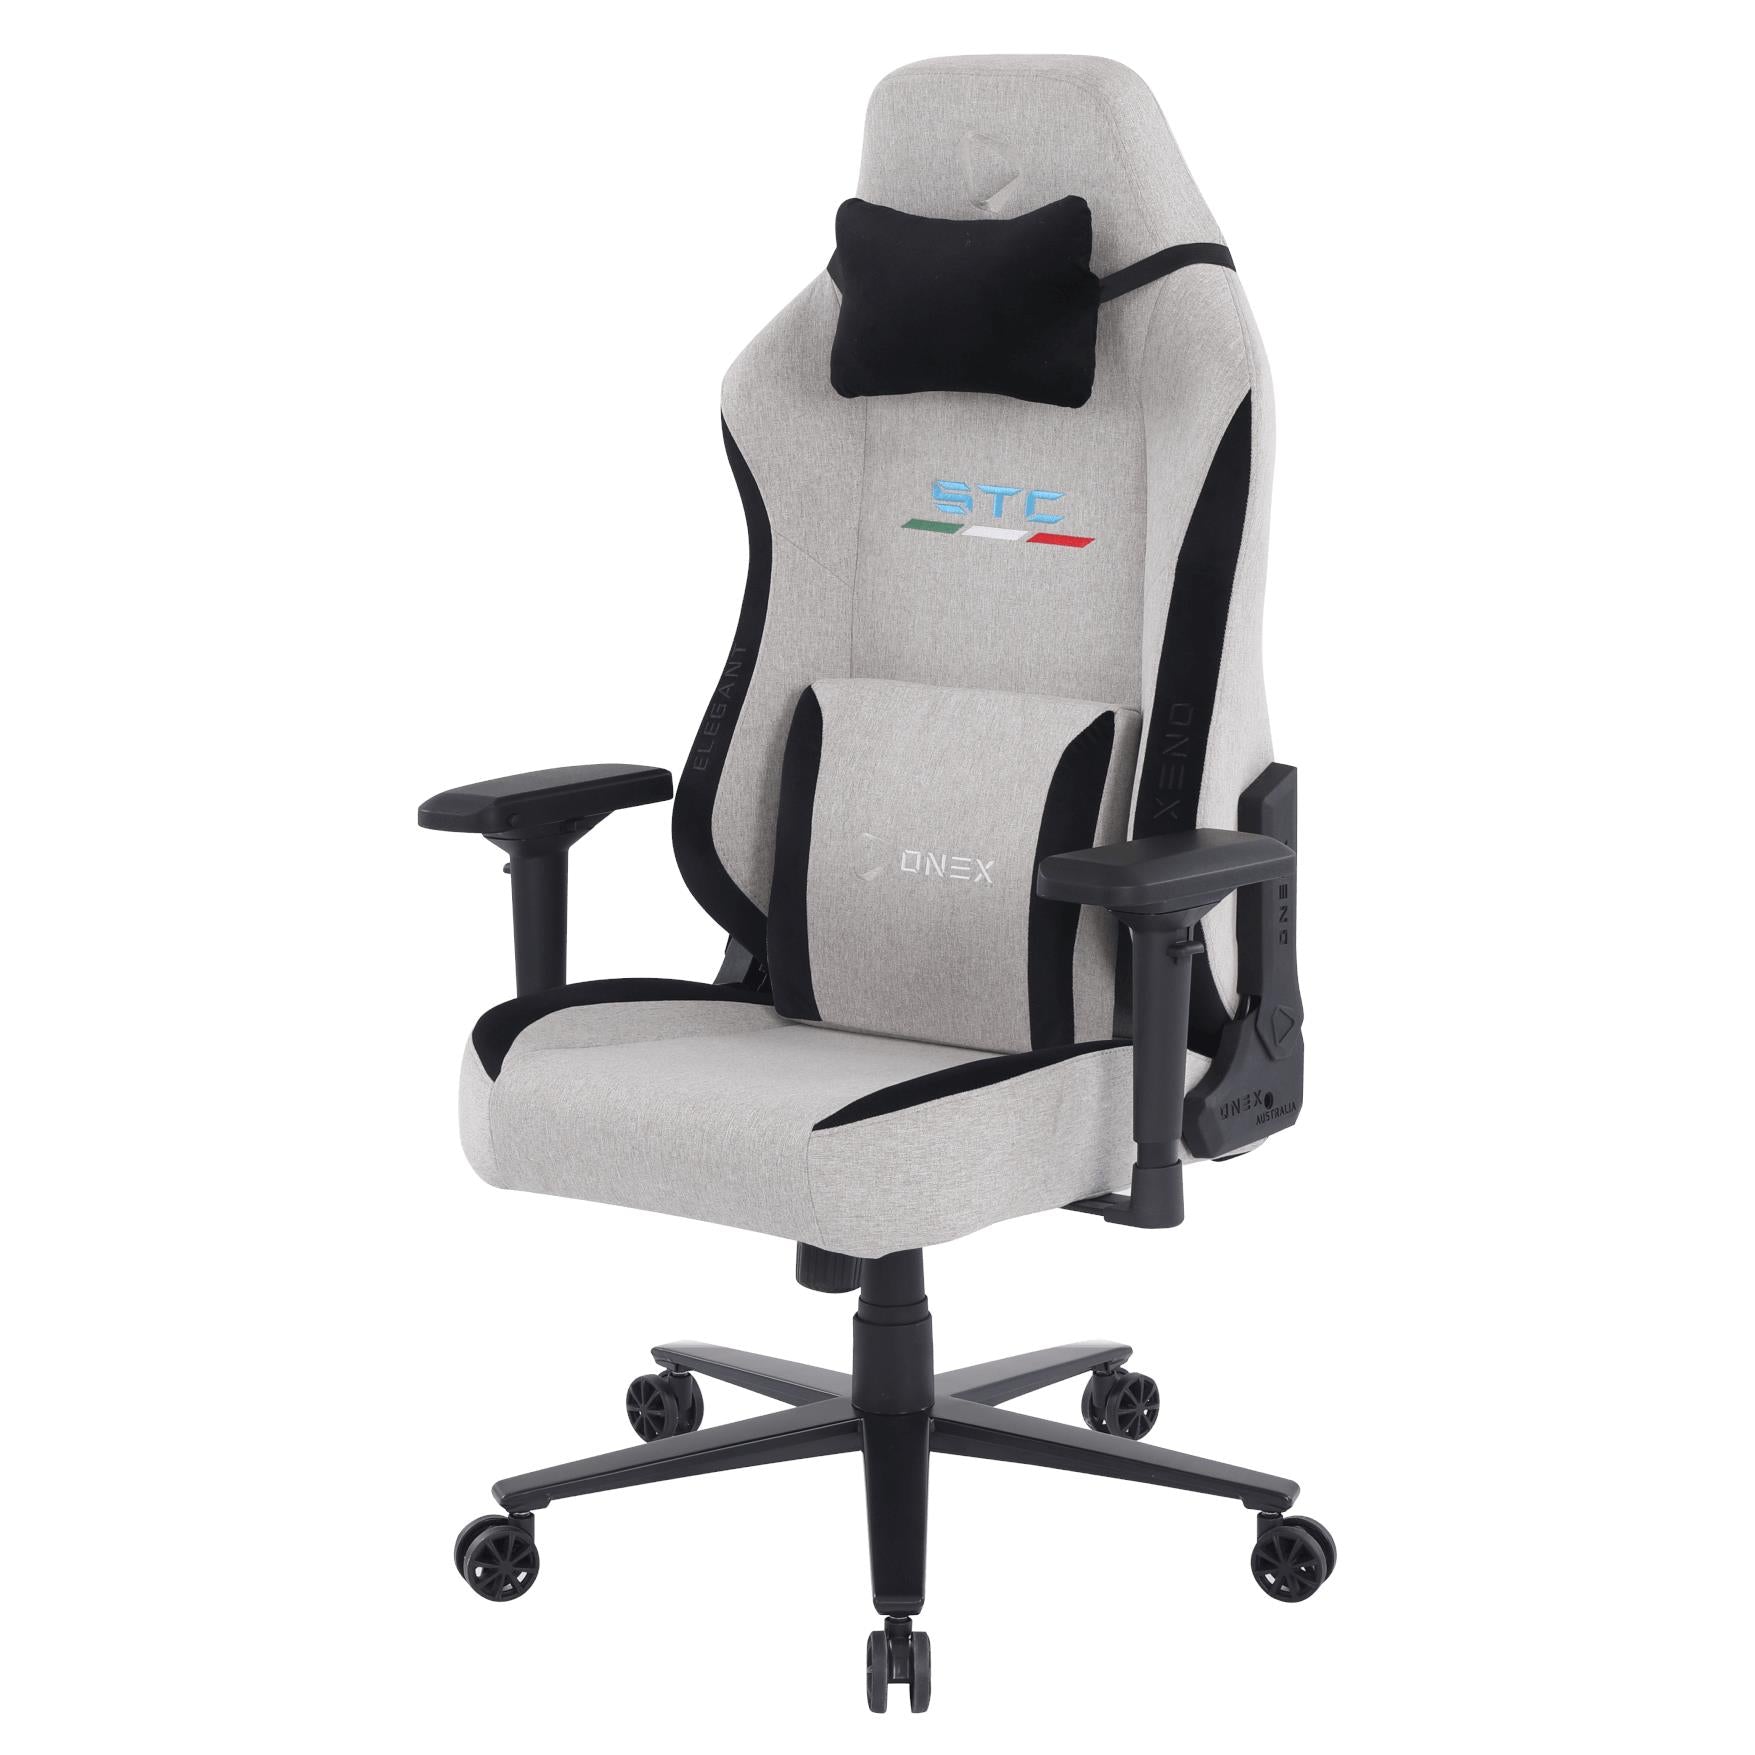 onex stc elegant xl series gaming chair (ivory)